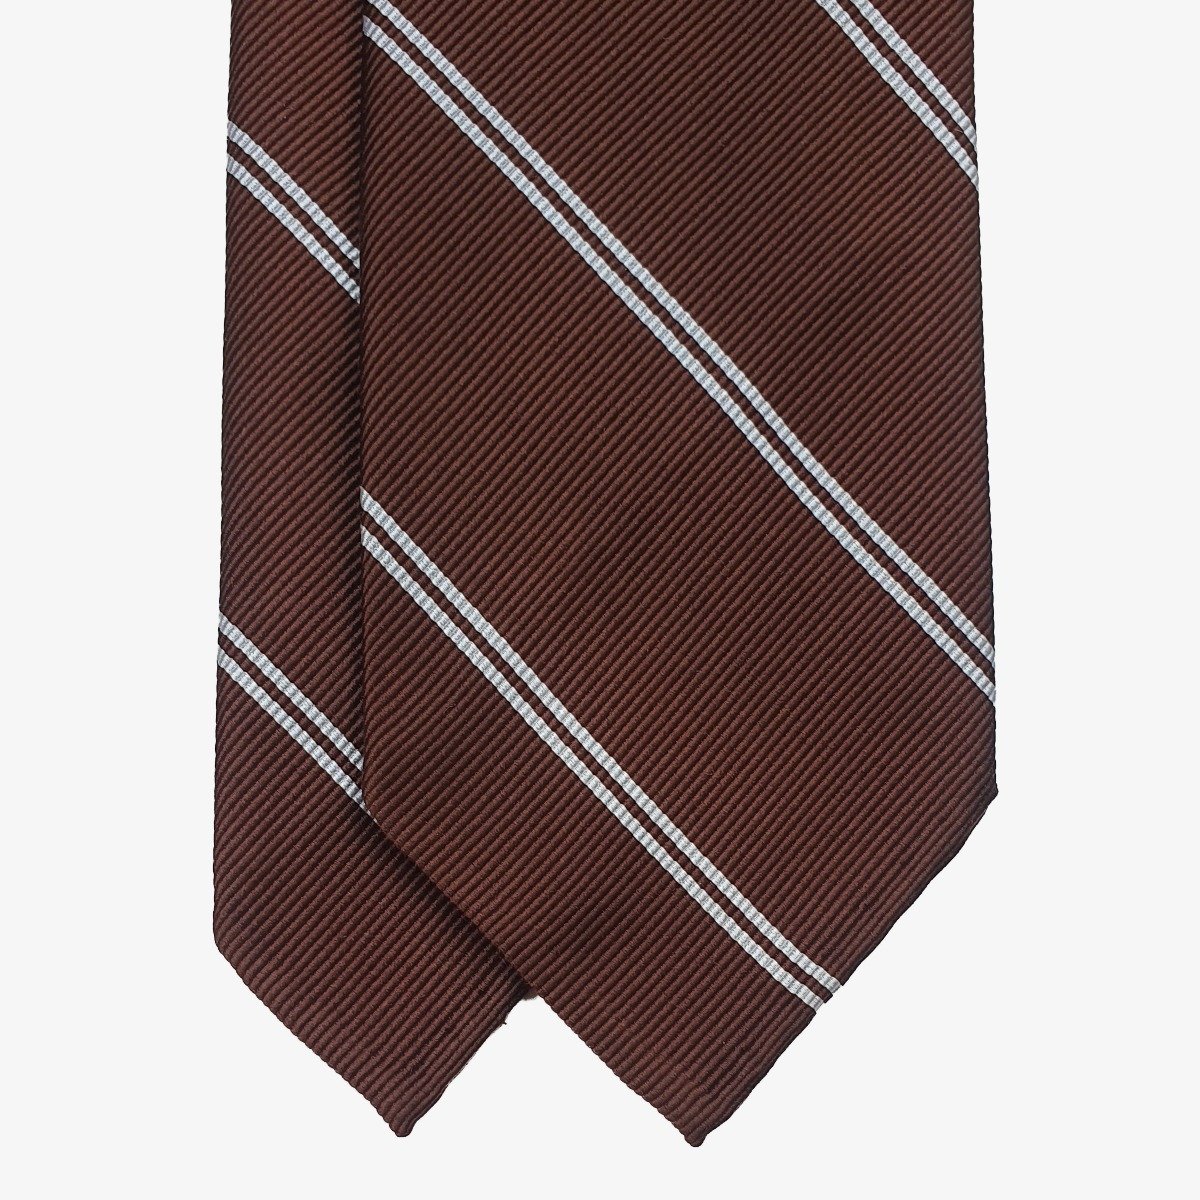 Shibumi Firenze brown repp striped silk tie with white stripes